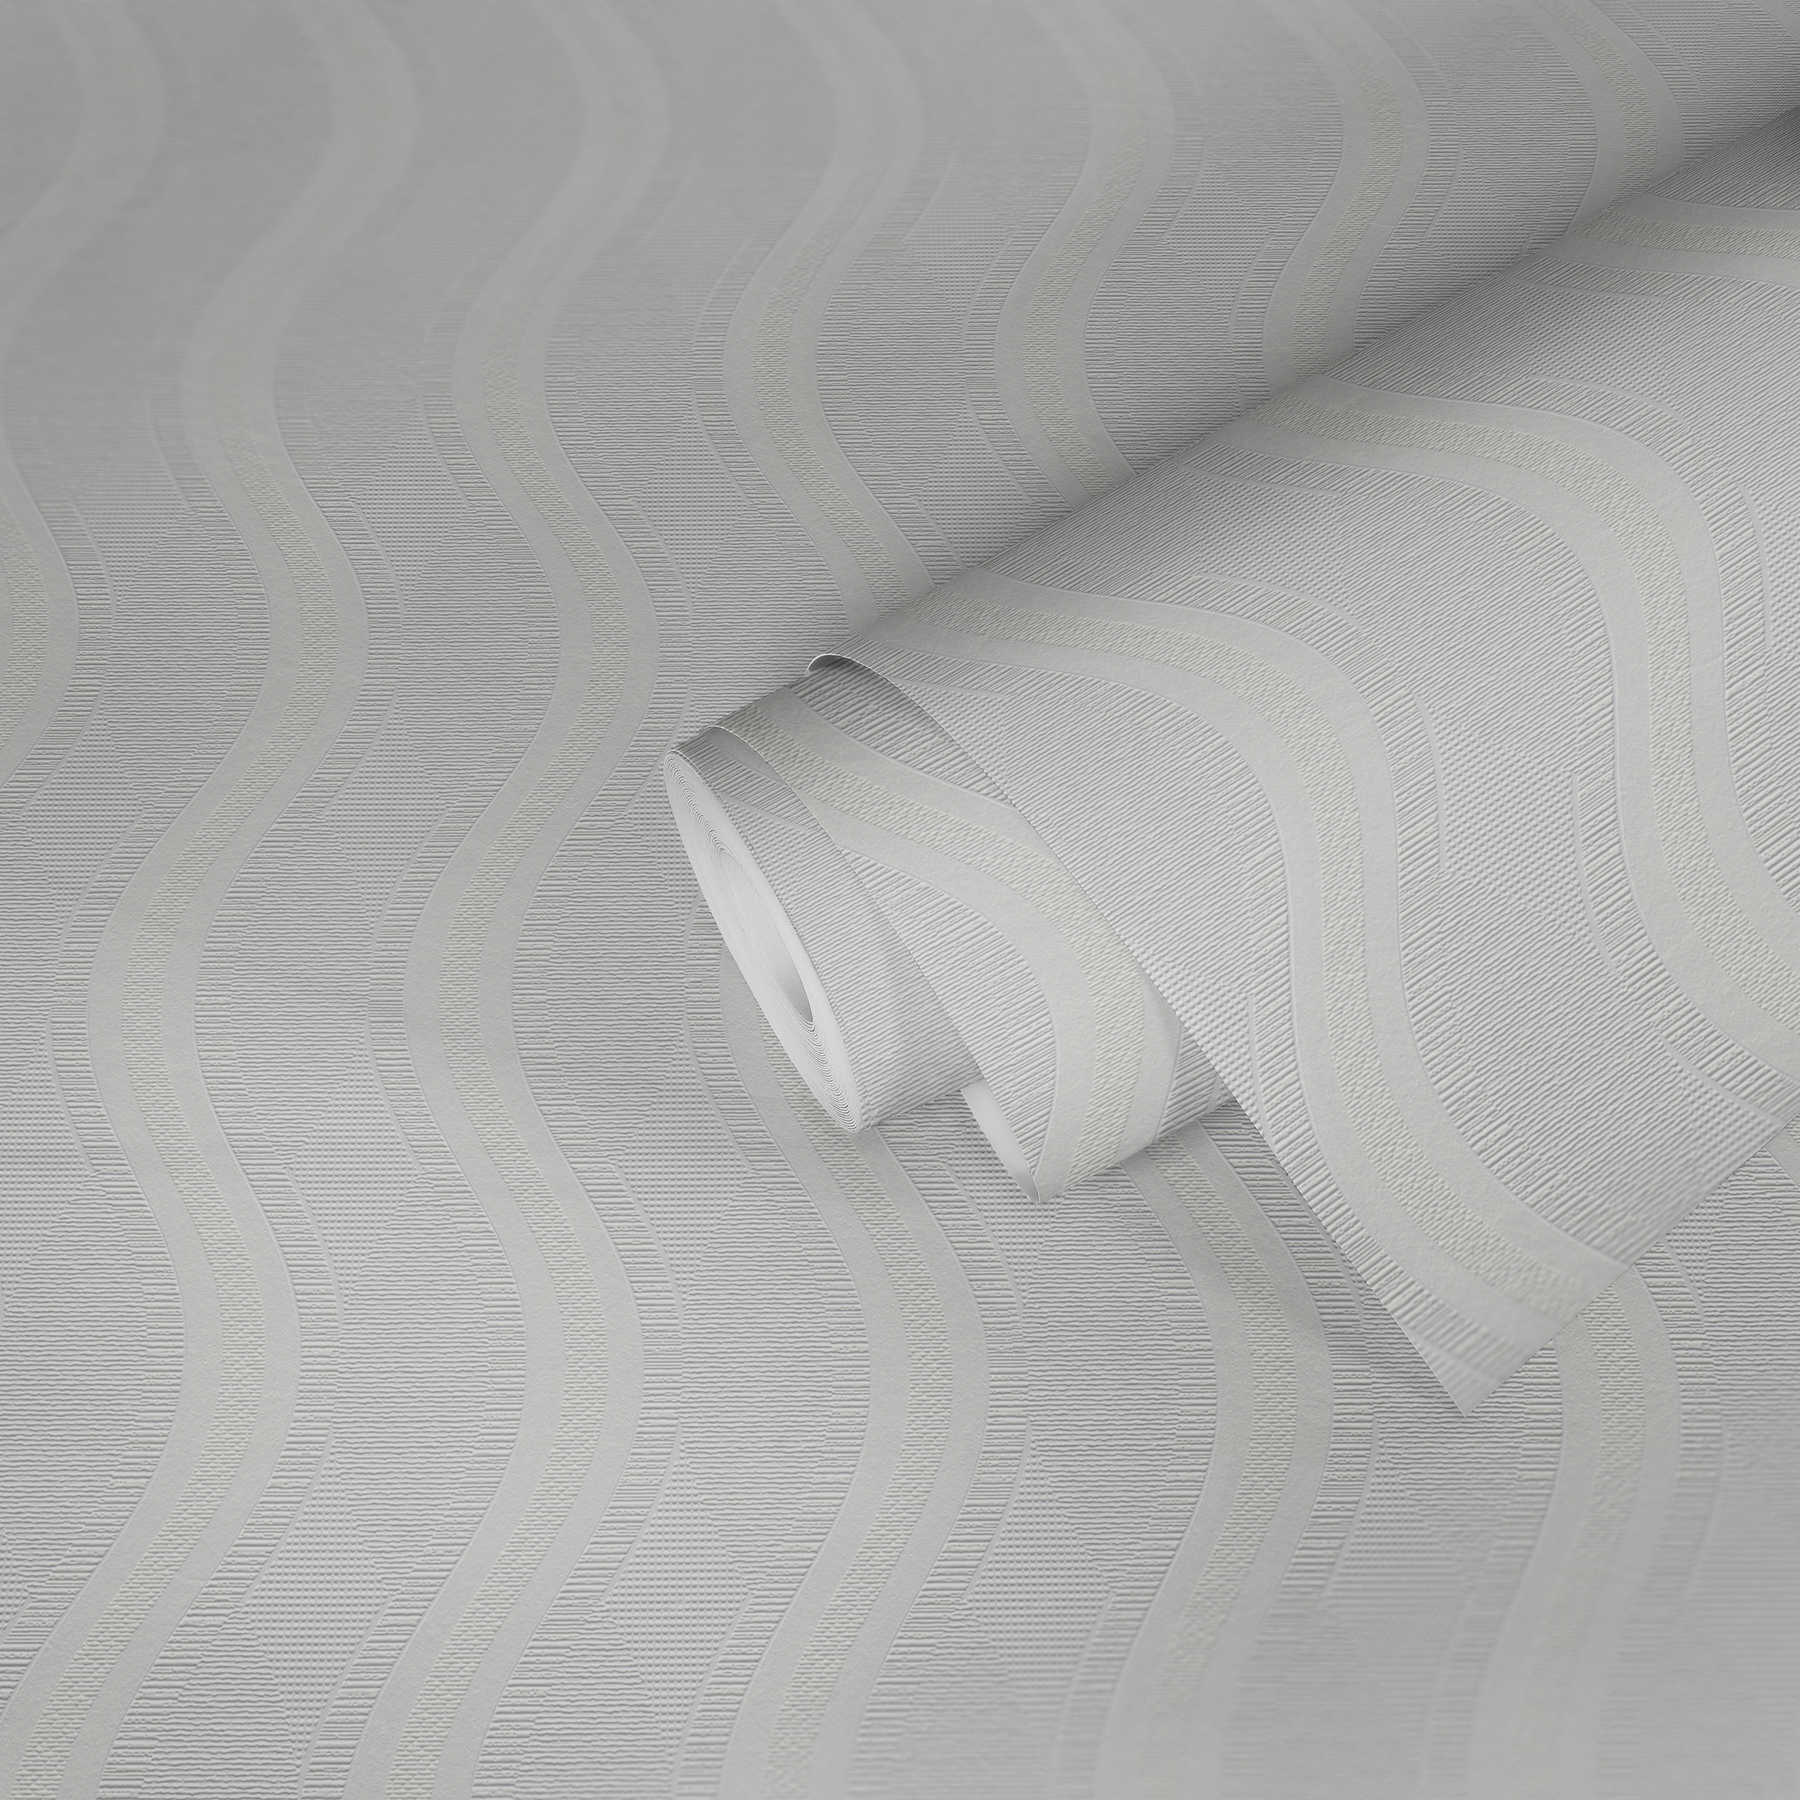             Retro wallpaper white with geometric wave pattern - white
        